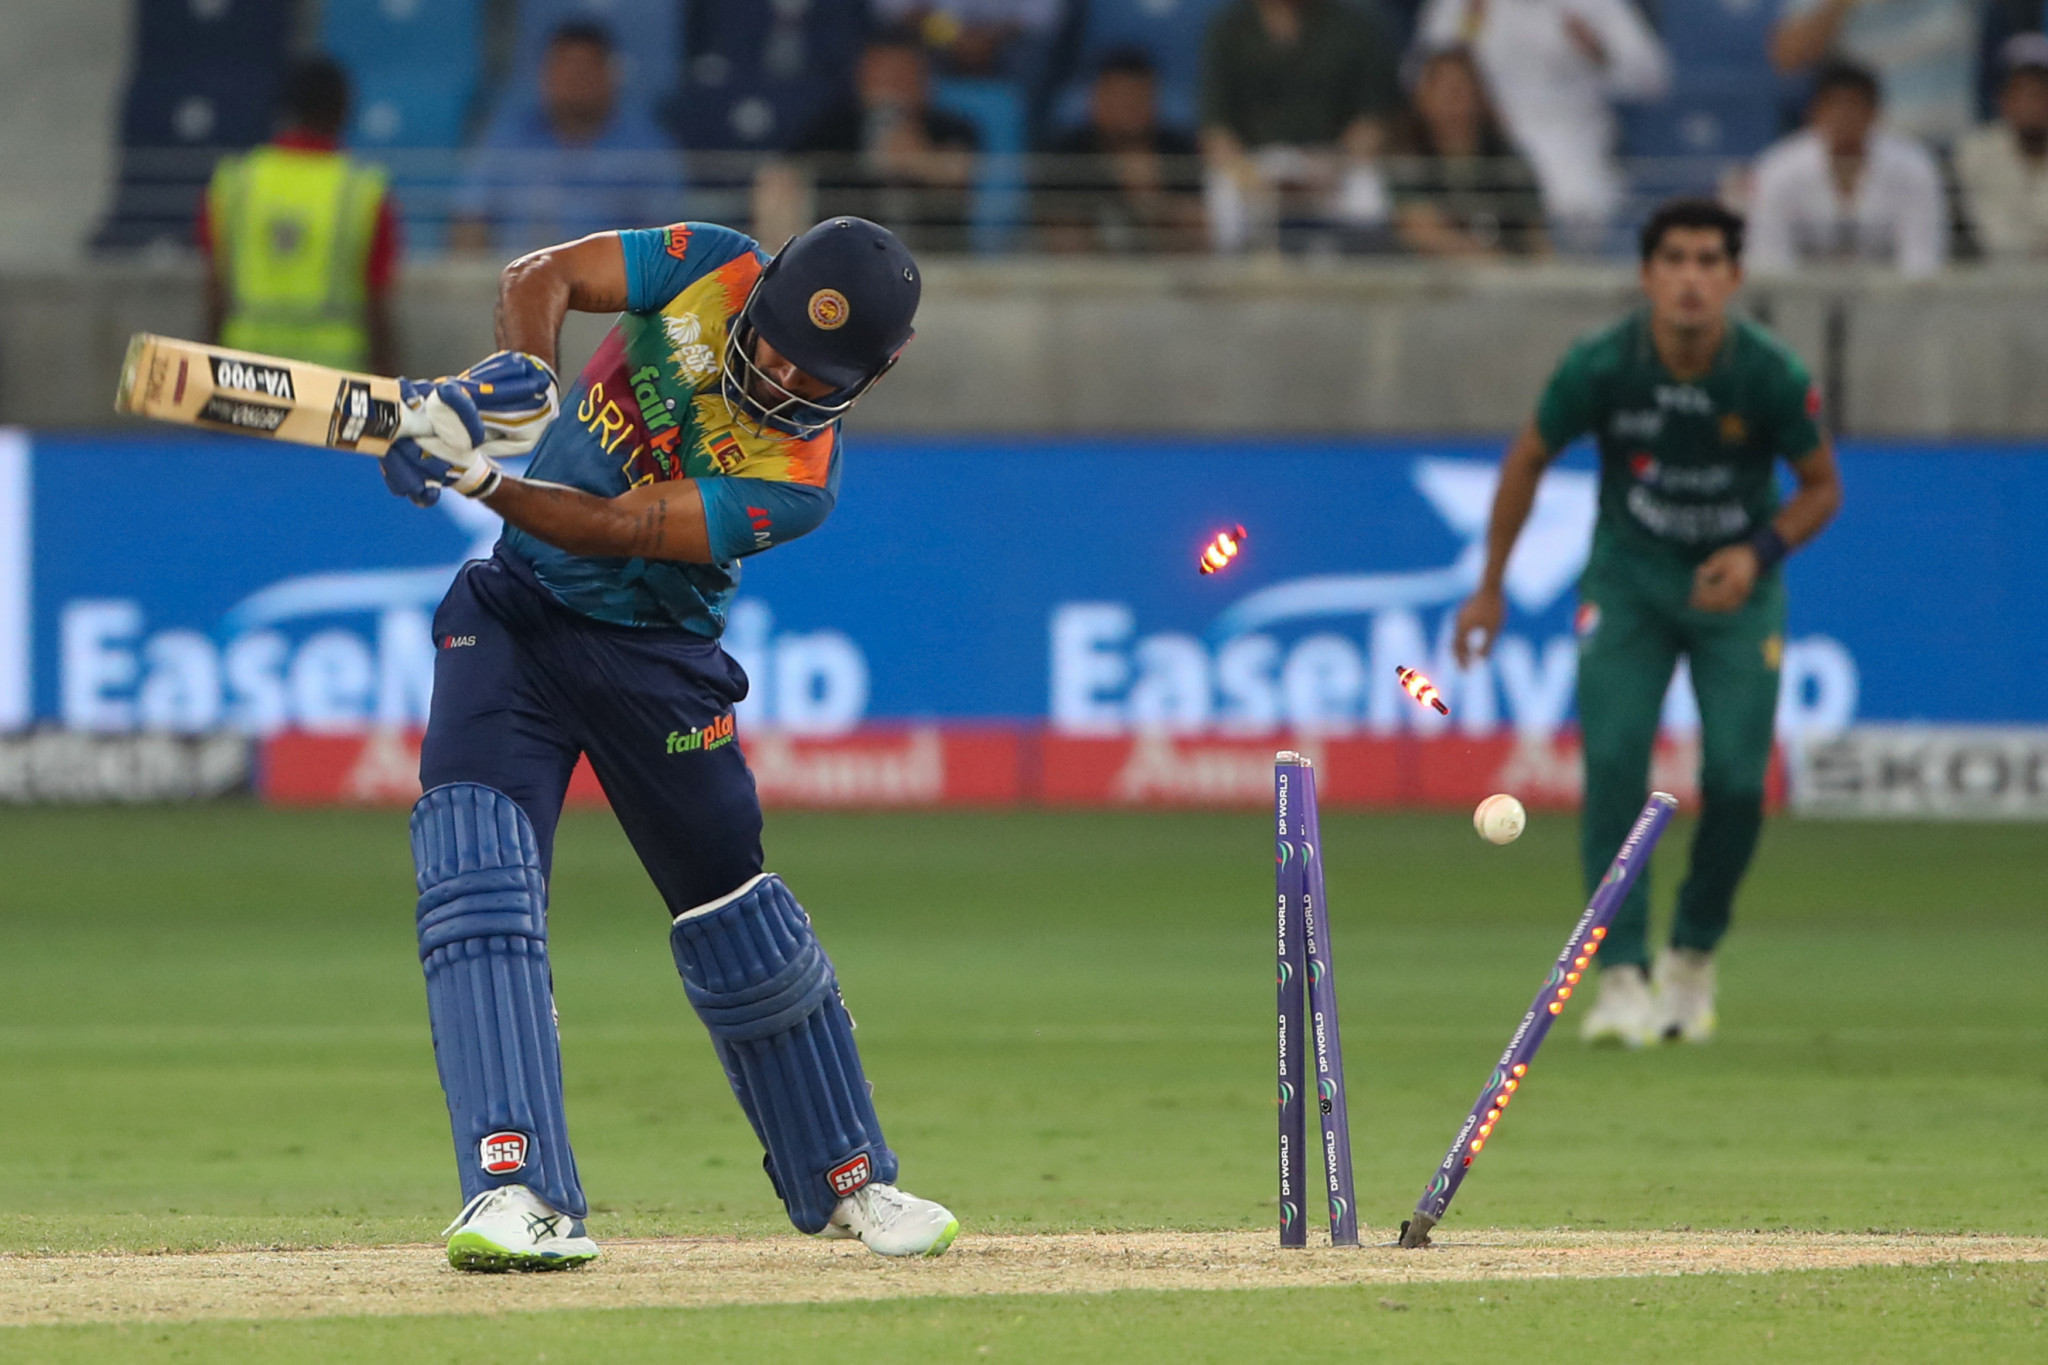 Sri Lanka cricketer Gunathilaka charged over alleged rape at T20 World Cup